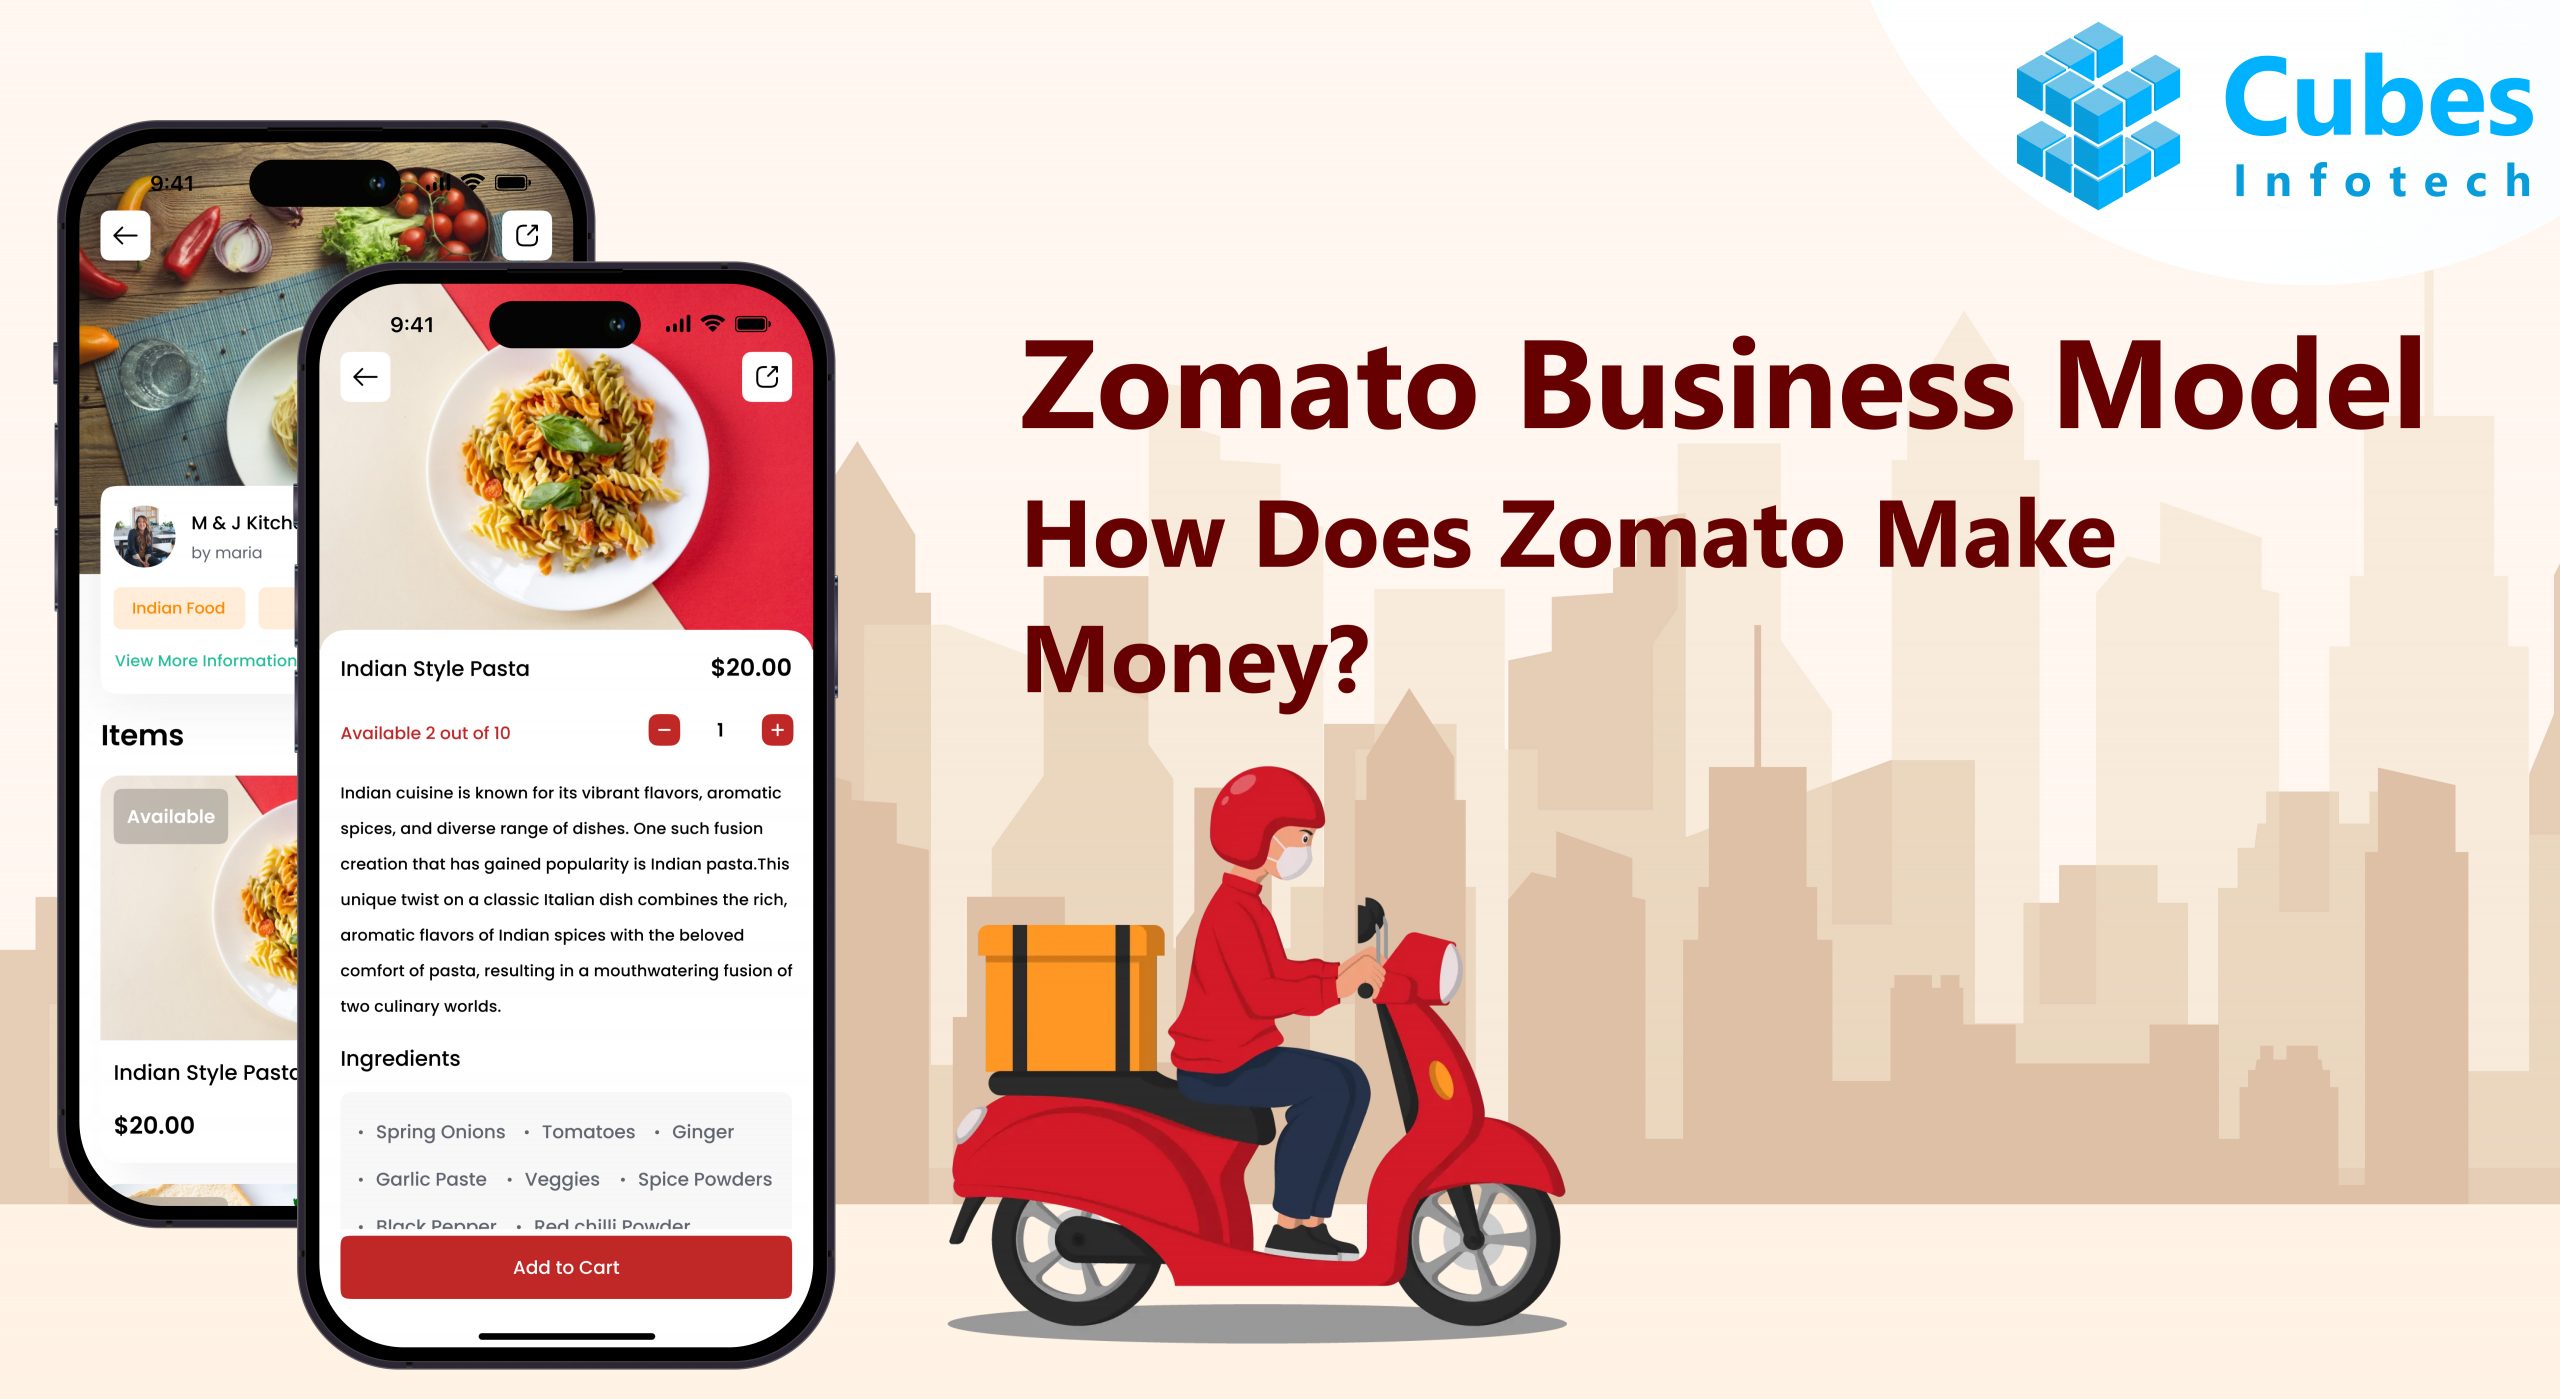 Zomato Business Model | How Does Zomato Make Money?